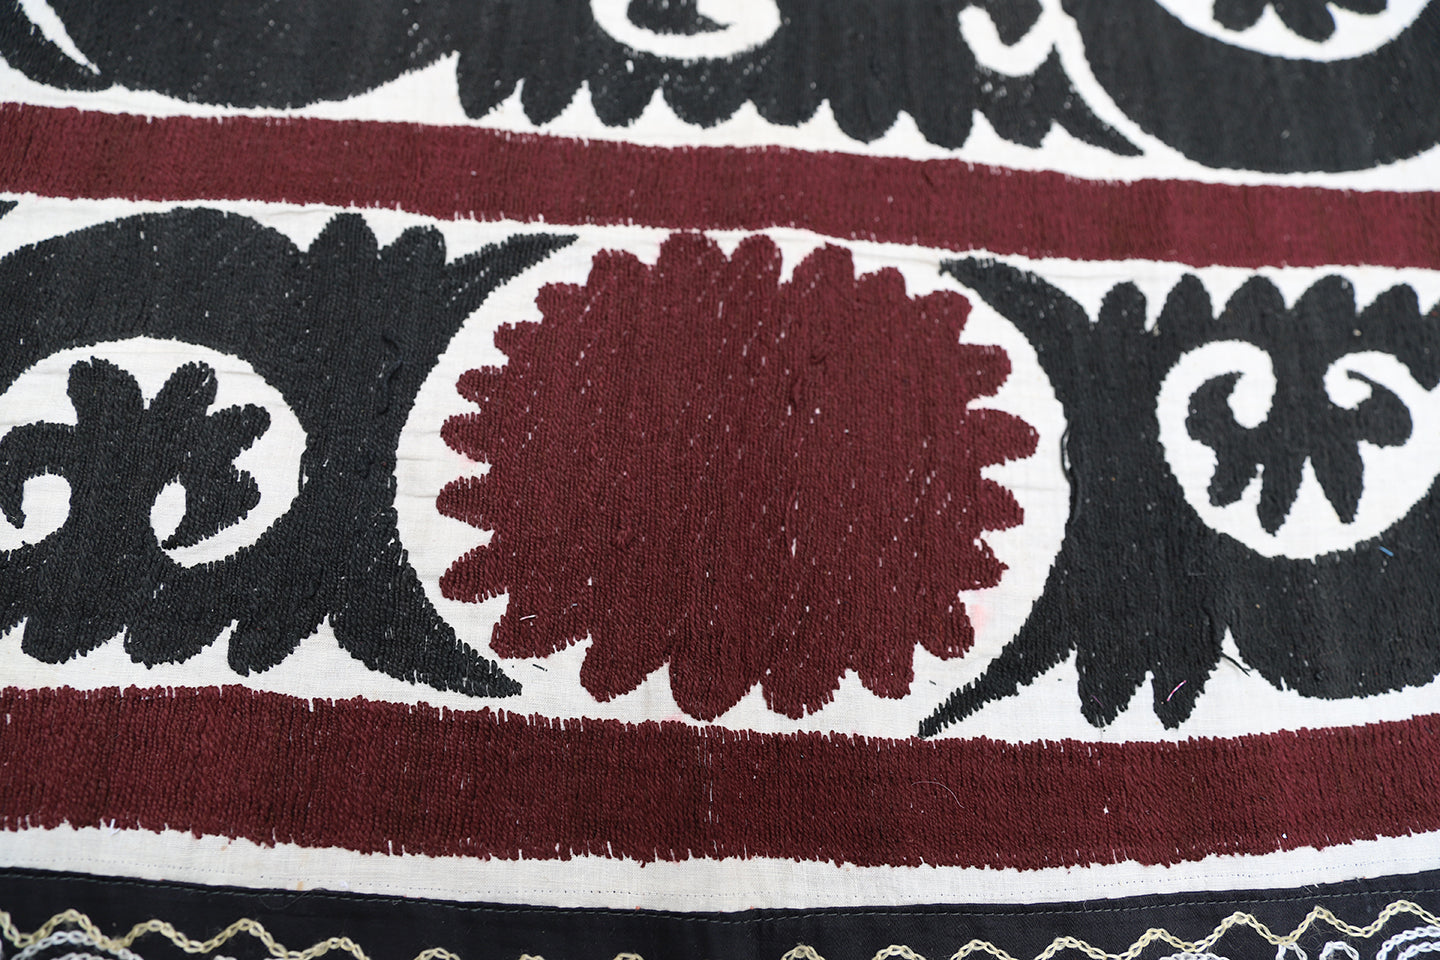 8'x11' Large Vintage Uzbek Embroidered Suzani Textile